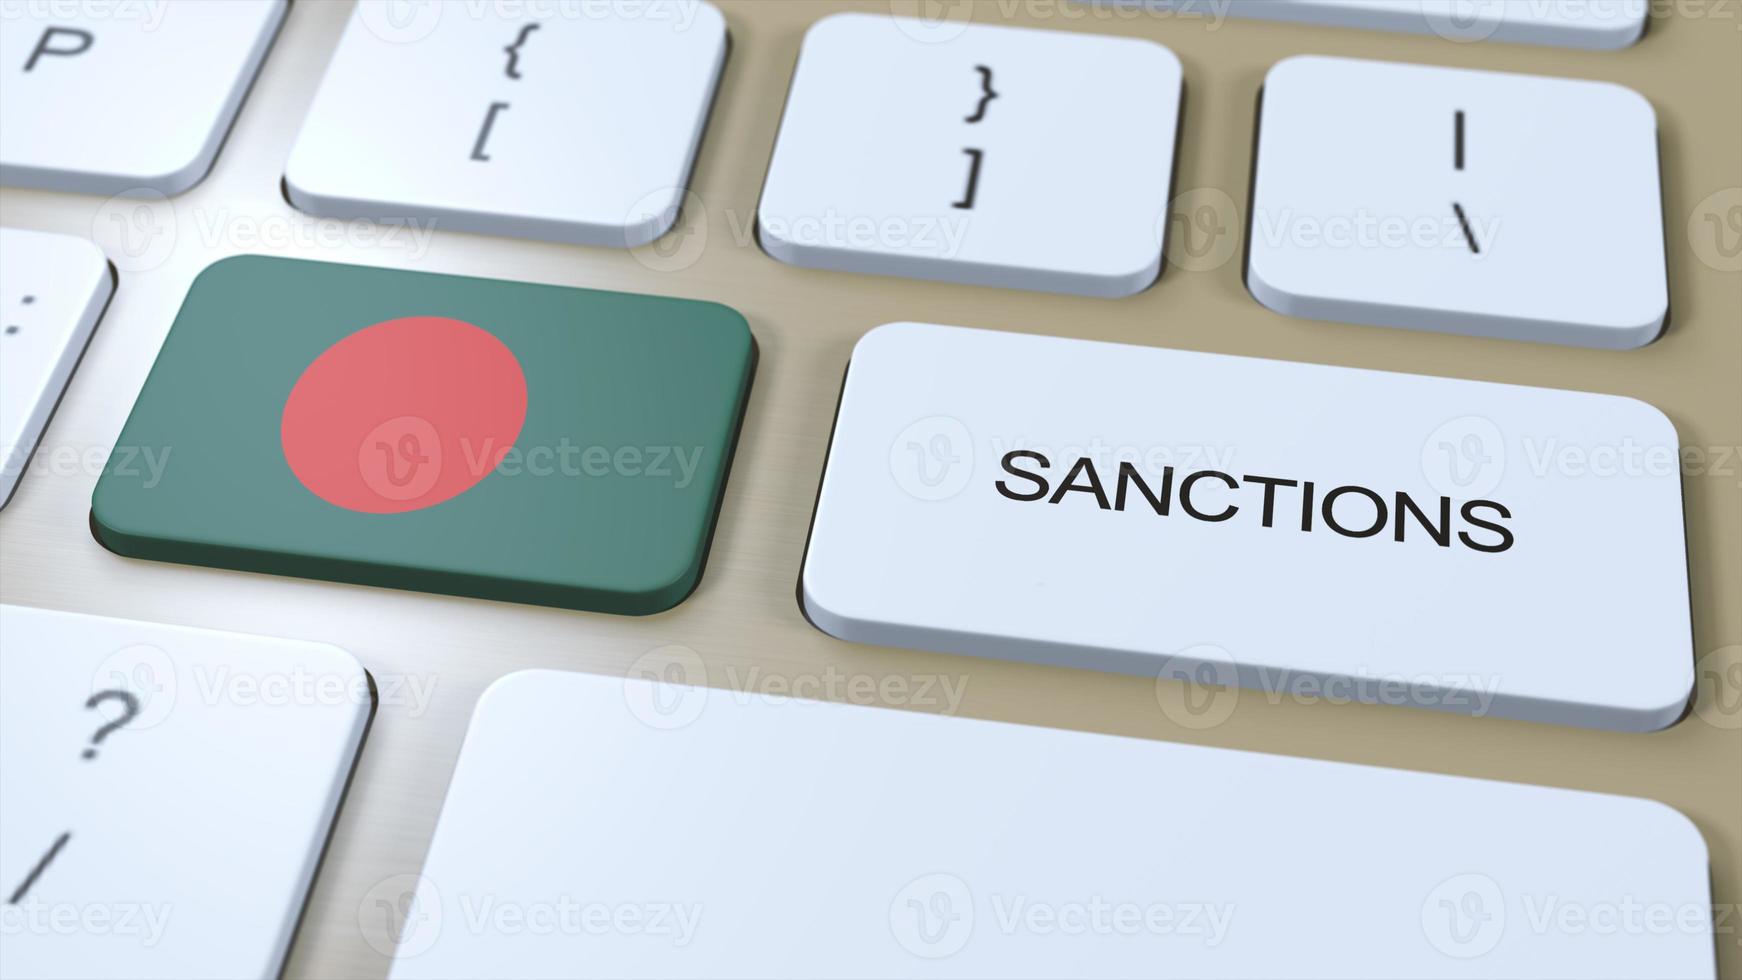 Bangladesh Imposes Sanctions Against Some Country. Sanctions Imposed on Bangladesh. Keyboard Button Push. Politics 3D Illustration photo